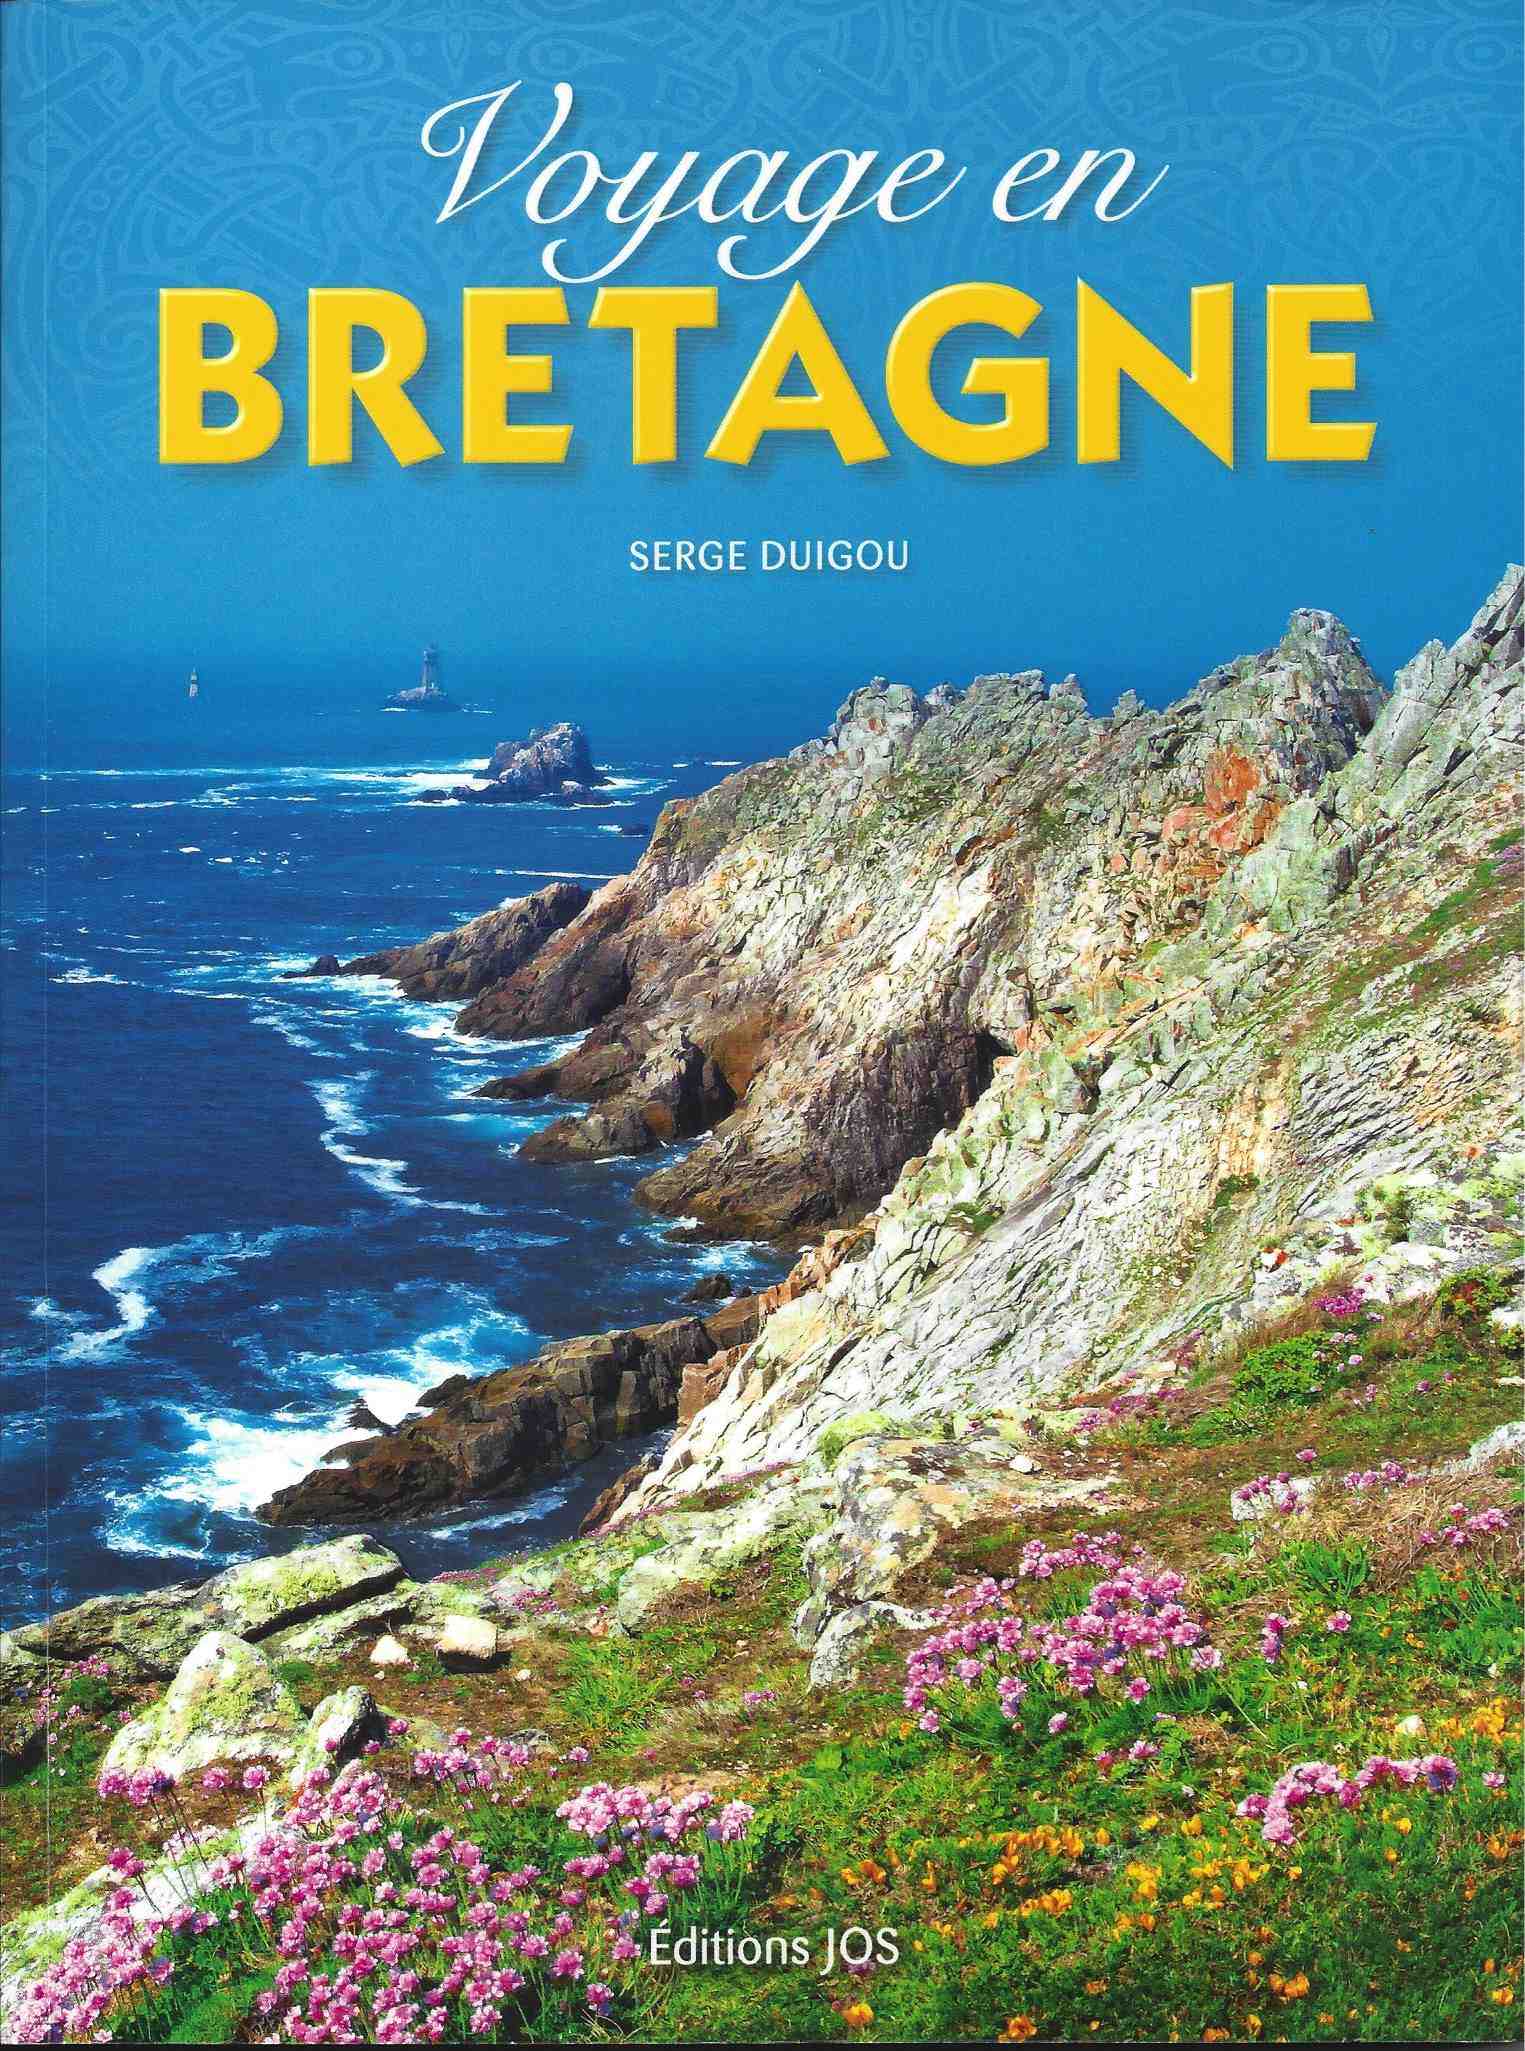 bretagne voyage - Image